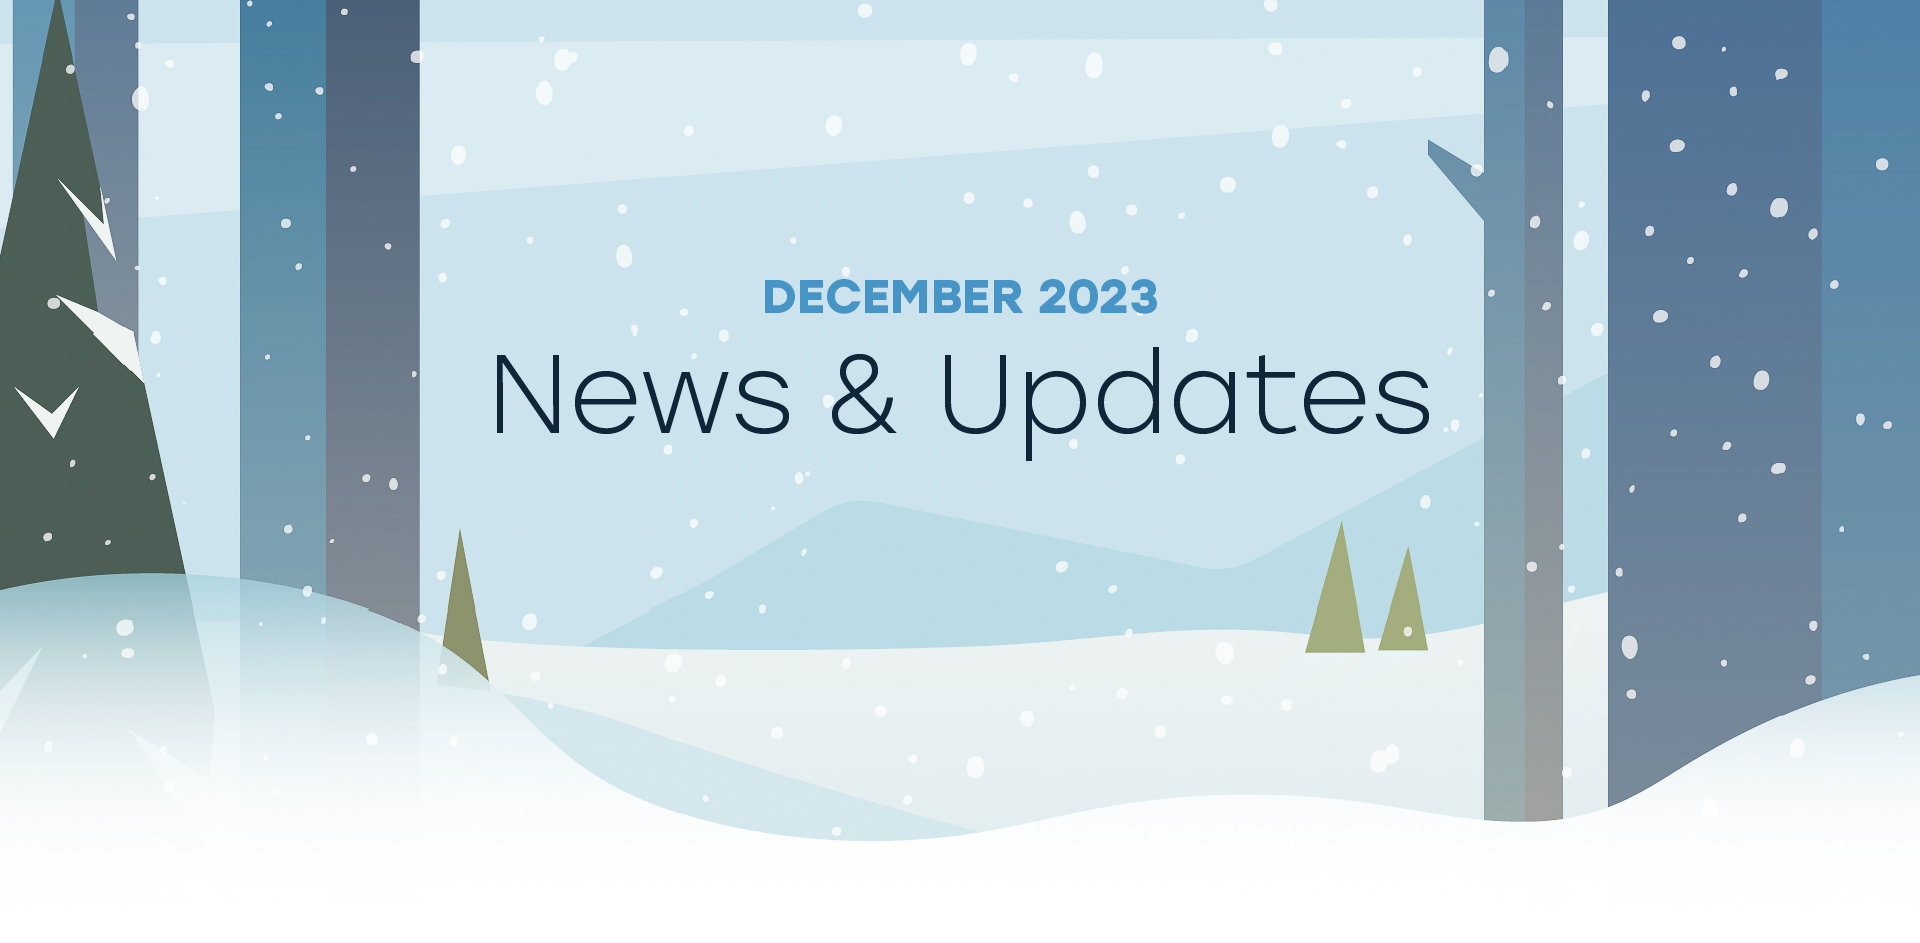 UPP's December 2023 News & Updates